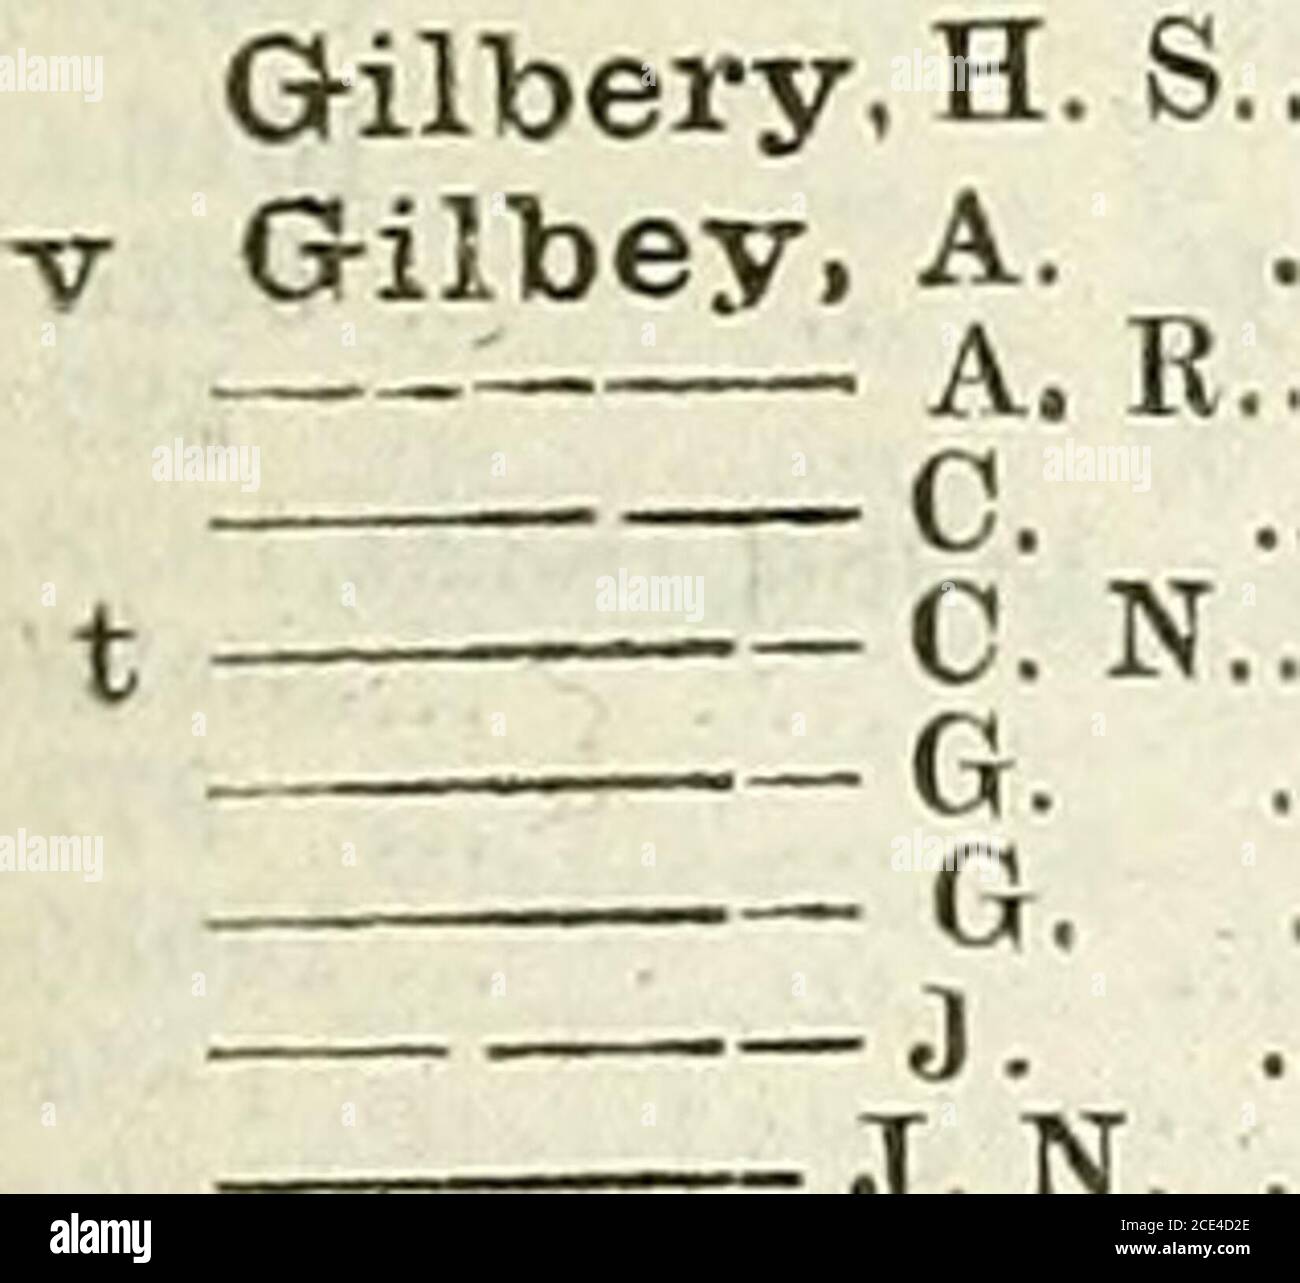 . Army list . Gilbert-Cooper, W. N. R. 2036 Qilbertson, C. F. G.. J.N. Gilby.C.Gilchrist, G. C. H. T. J. ... J.S. W. F. C. W.H. Gilday, A. L. C. ..Gildea, G. A G. A F. Sir 3. ... Gilder, E. — T. G. ... T. N. ... Gilderdale, F.Gilding-, F. ... 2412 1760 1511 ... 2.335 2311 2043c 2 43a 2294 15876 2636 847 20.32 2013c 1394e 2444 2294 481a . 2)4.3c 1823a, 1837c 2363 2043e 23.5.!) 15586 1781% 1794(7 1564 1529 214.3c Stock Photo